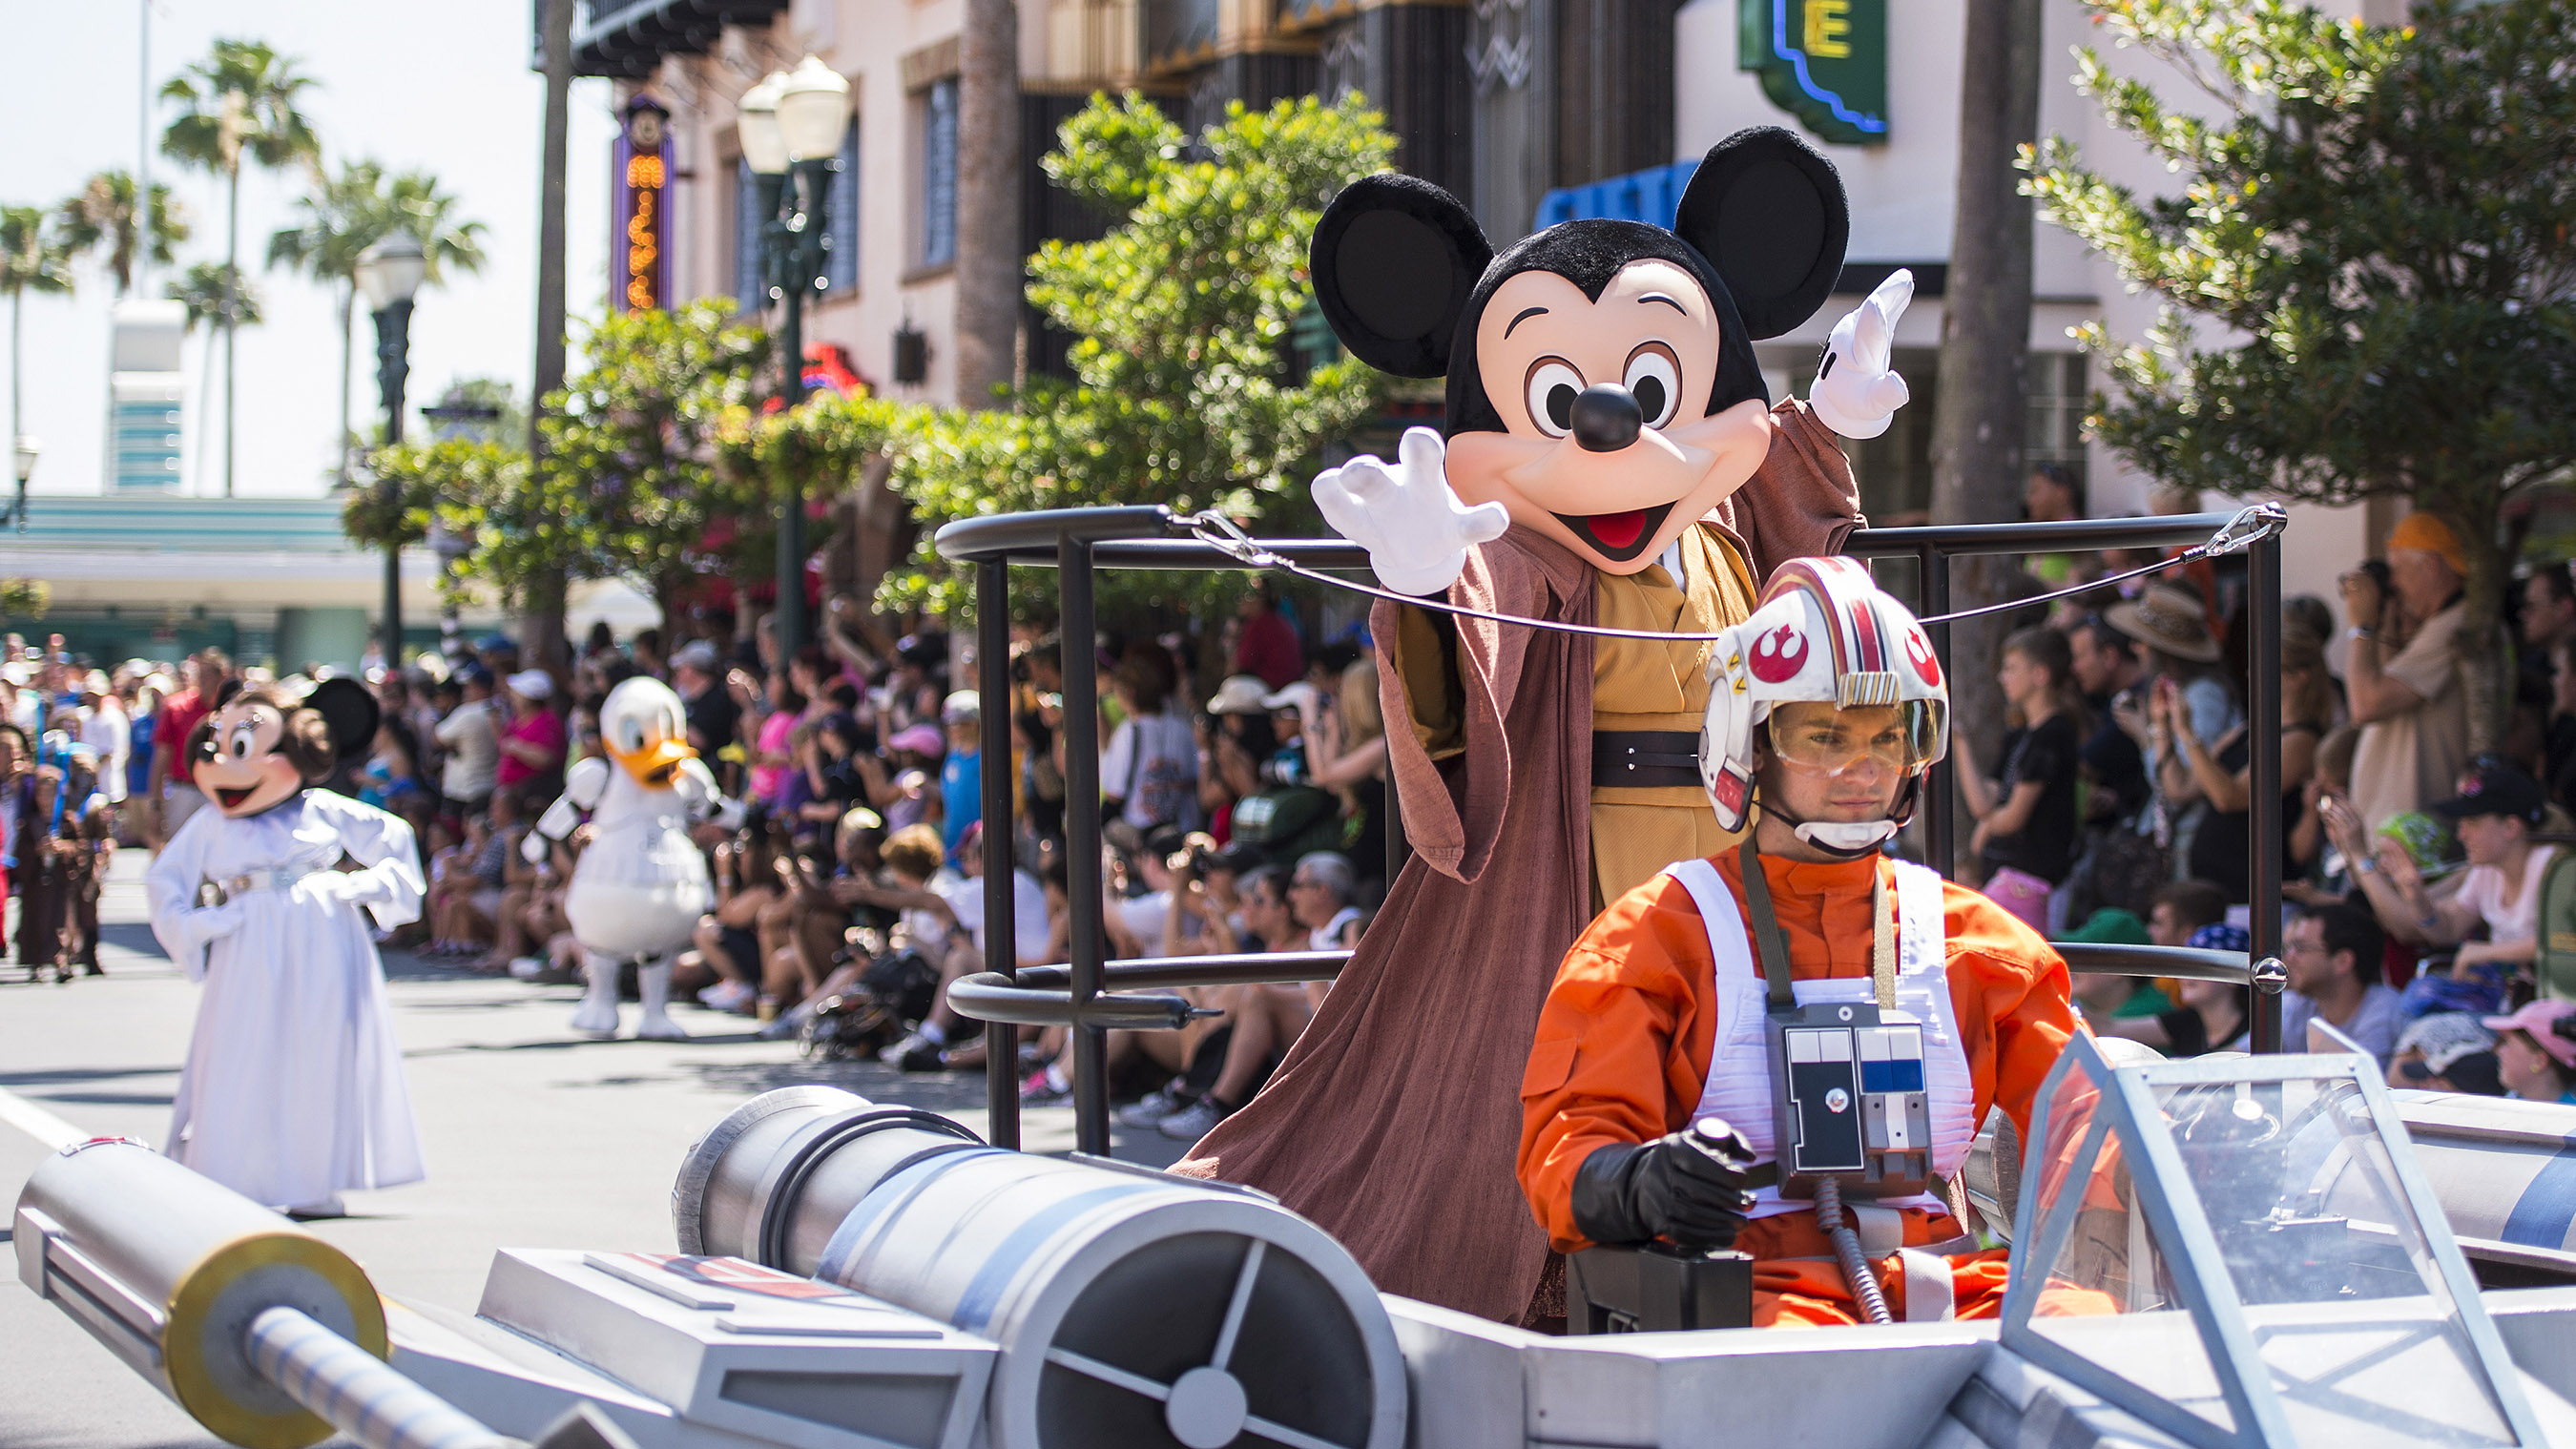 Where Disney Hollywood Studio amusement park exist?